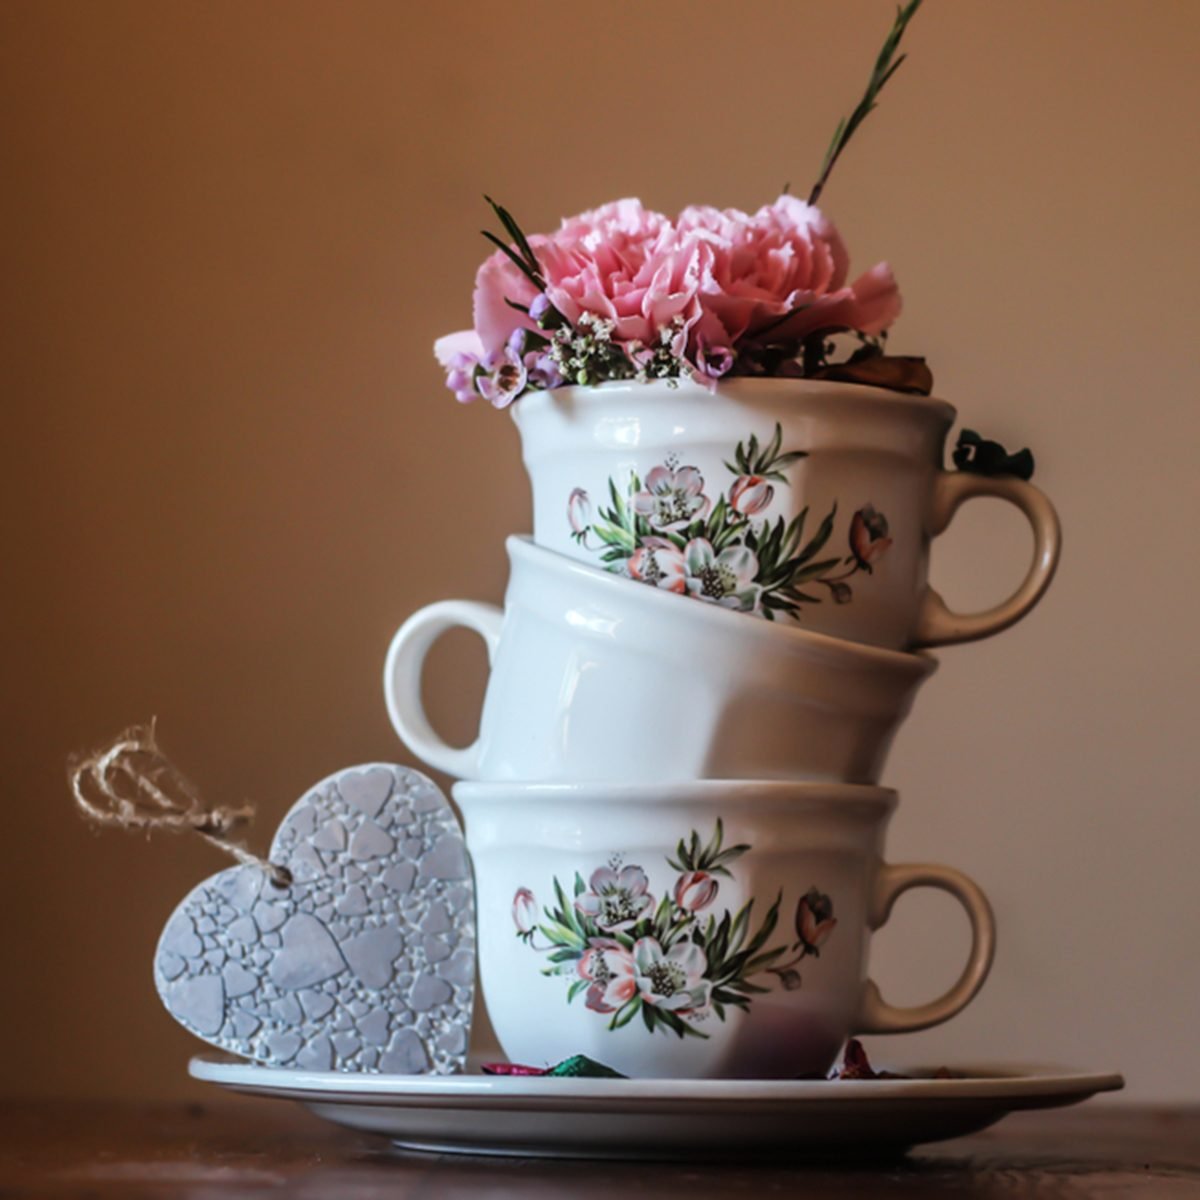 https://www.tasteofhome.com/wp-content/uploads/2019/04/tea-cup-flower-pots-shutterstock_1293225196.jpg?fit=700%2C700